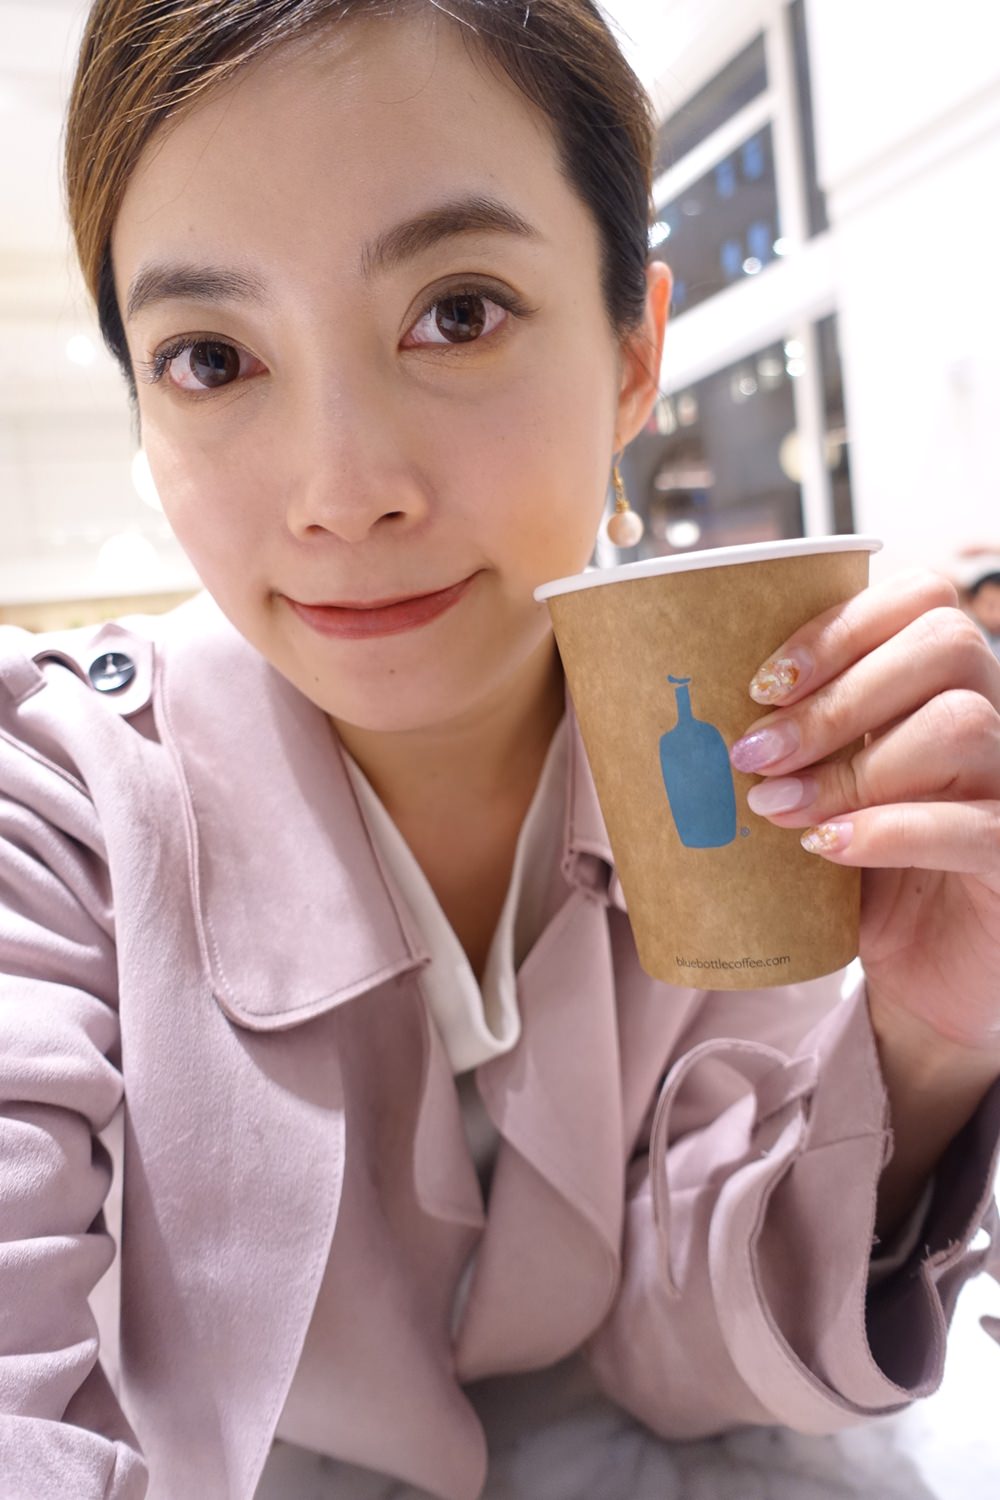 【Travel】藍瓶咖啡Blue Bottle Coffee舊金山Sansome St.分店